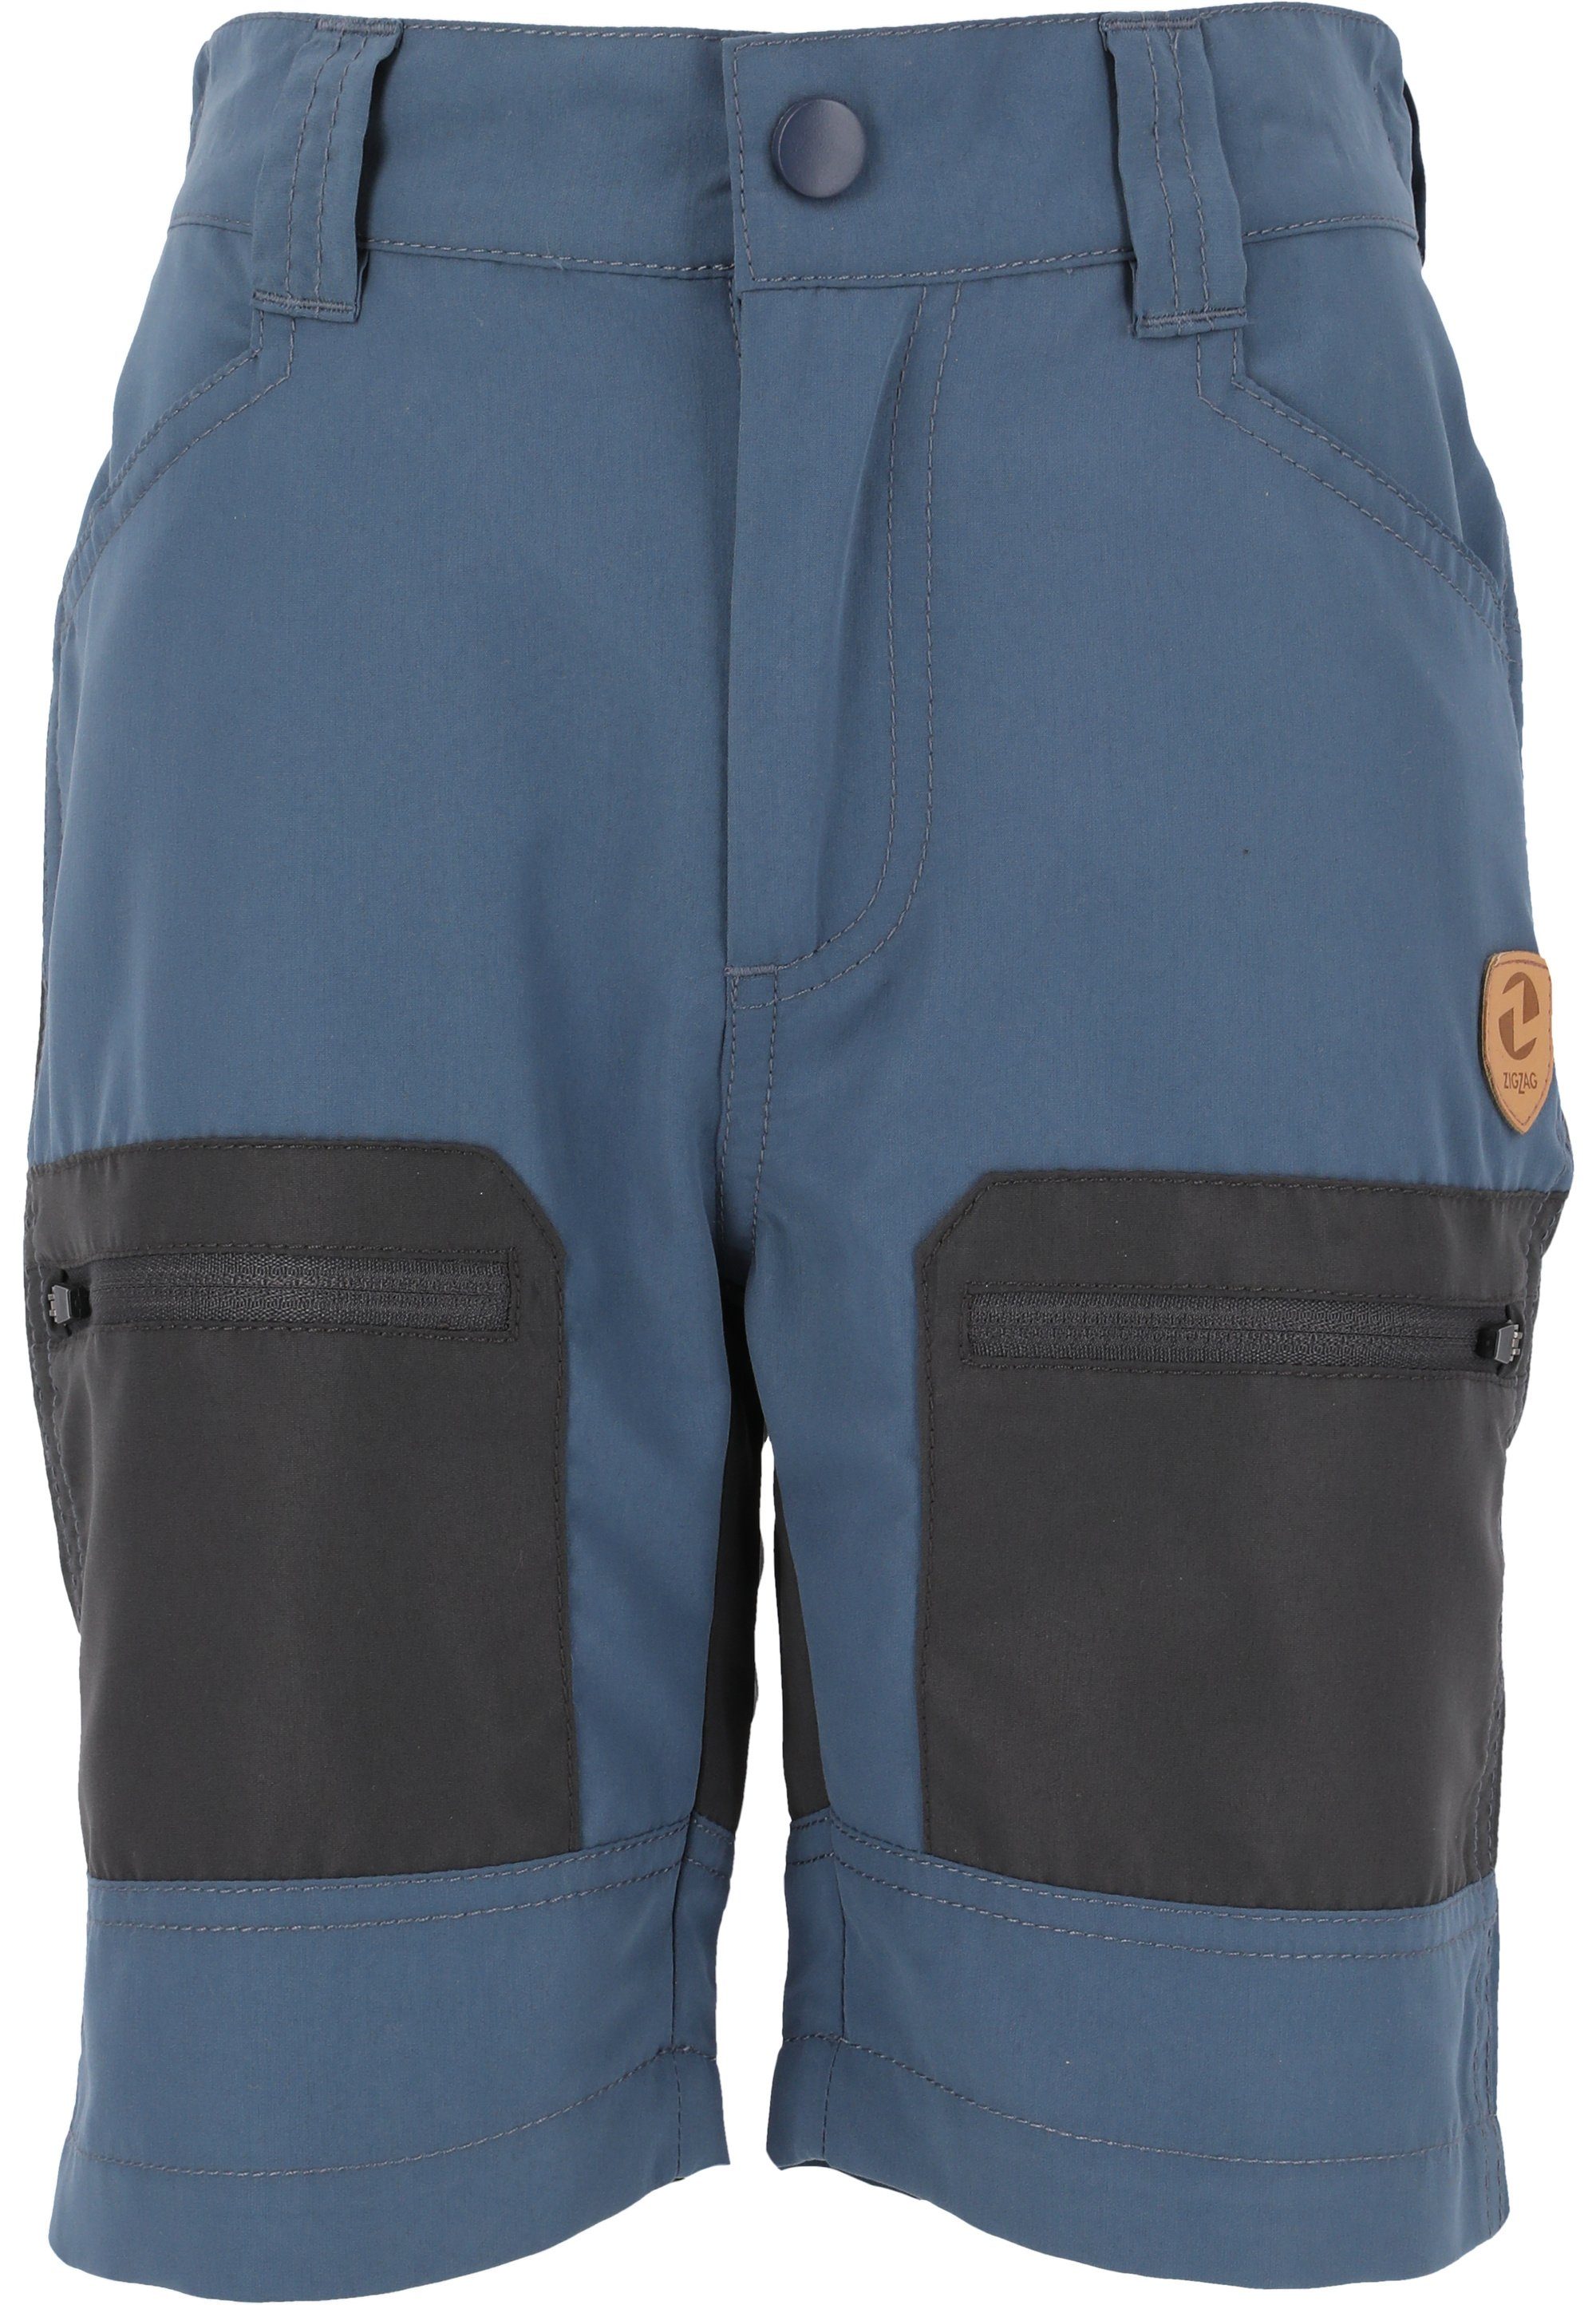 ZIGZAG Shorts Atlantic blau-schwarz aus Material robustem